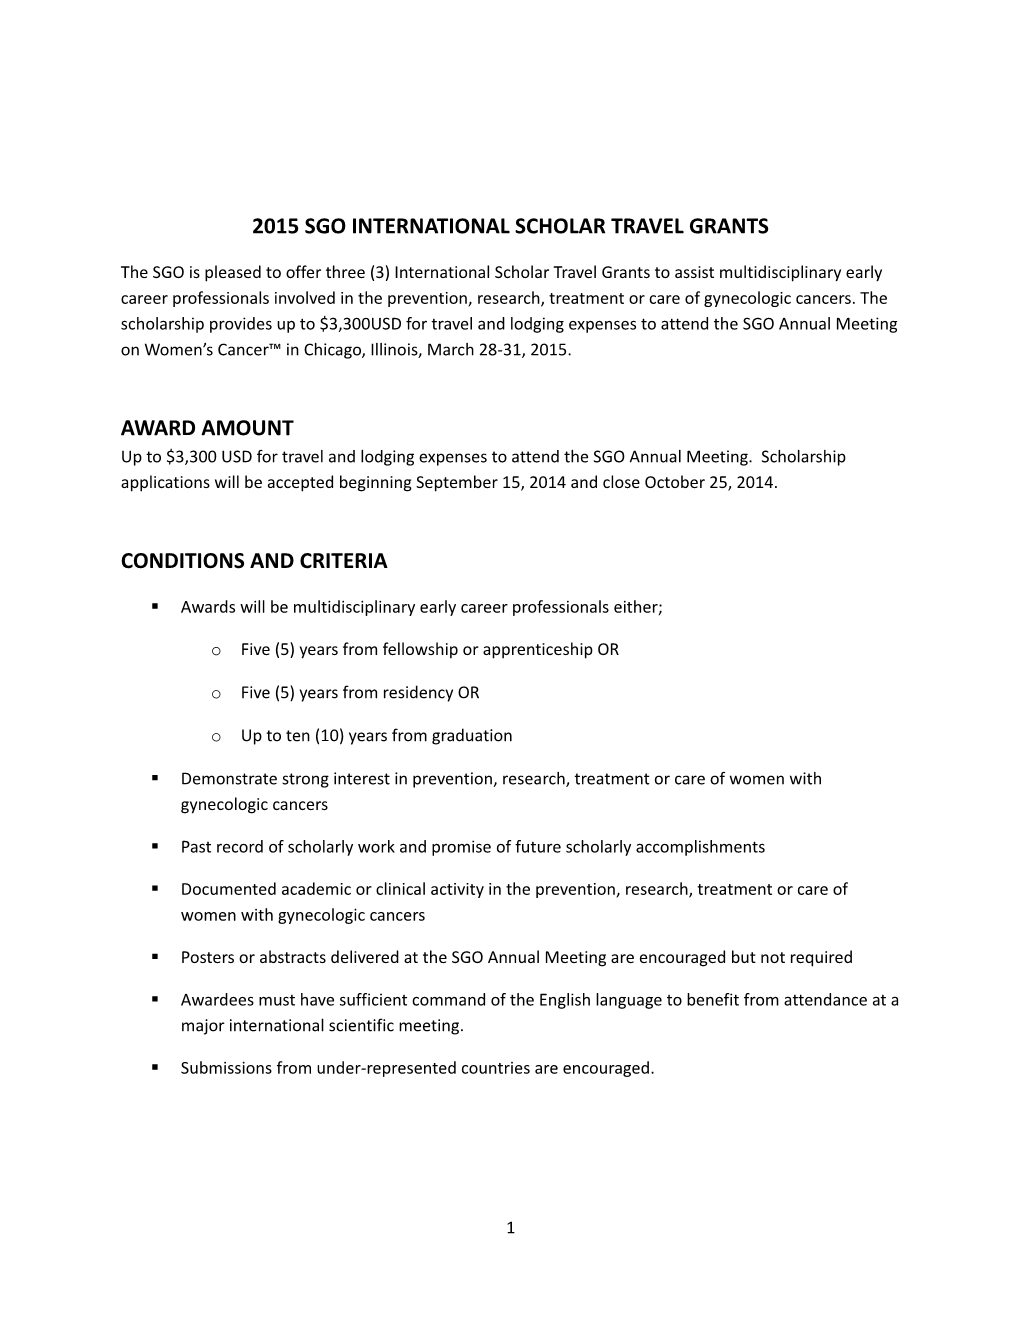 2015 SGO International SCHOLAR TRAVEL Grants